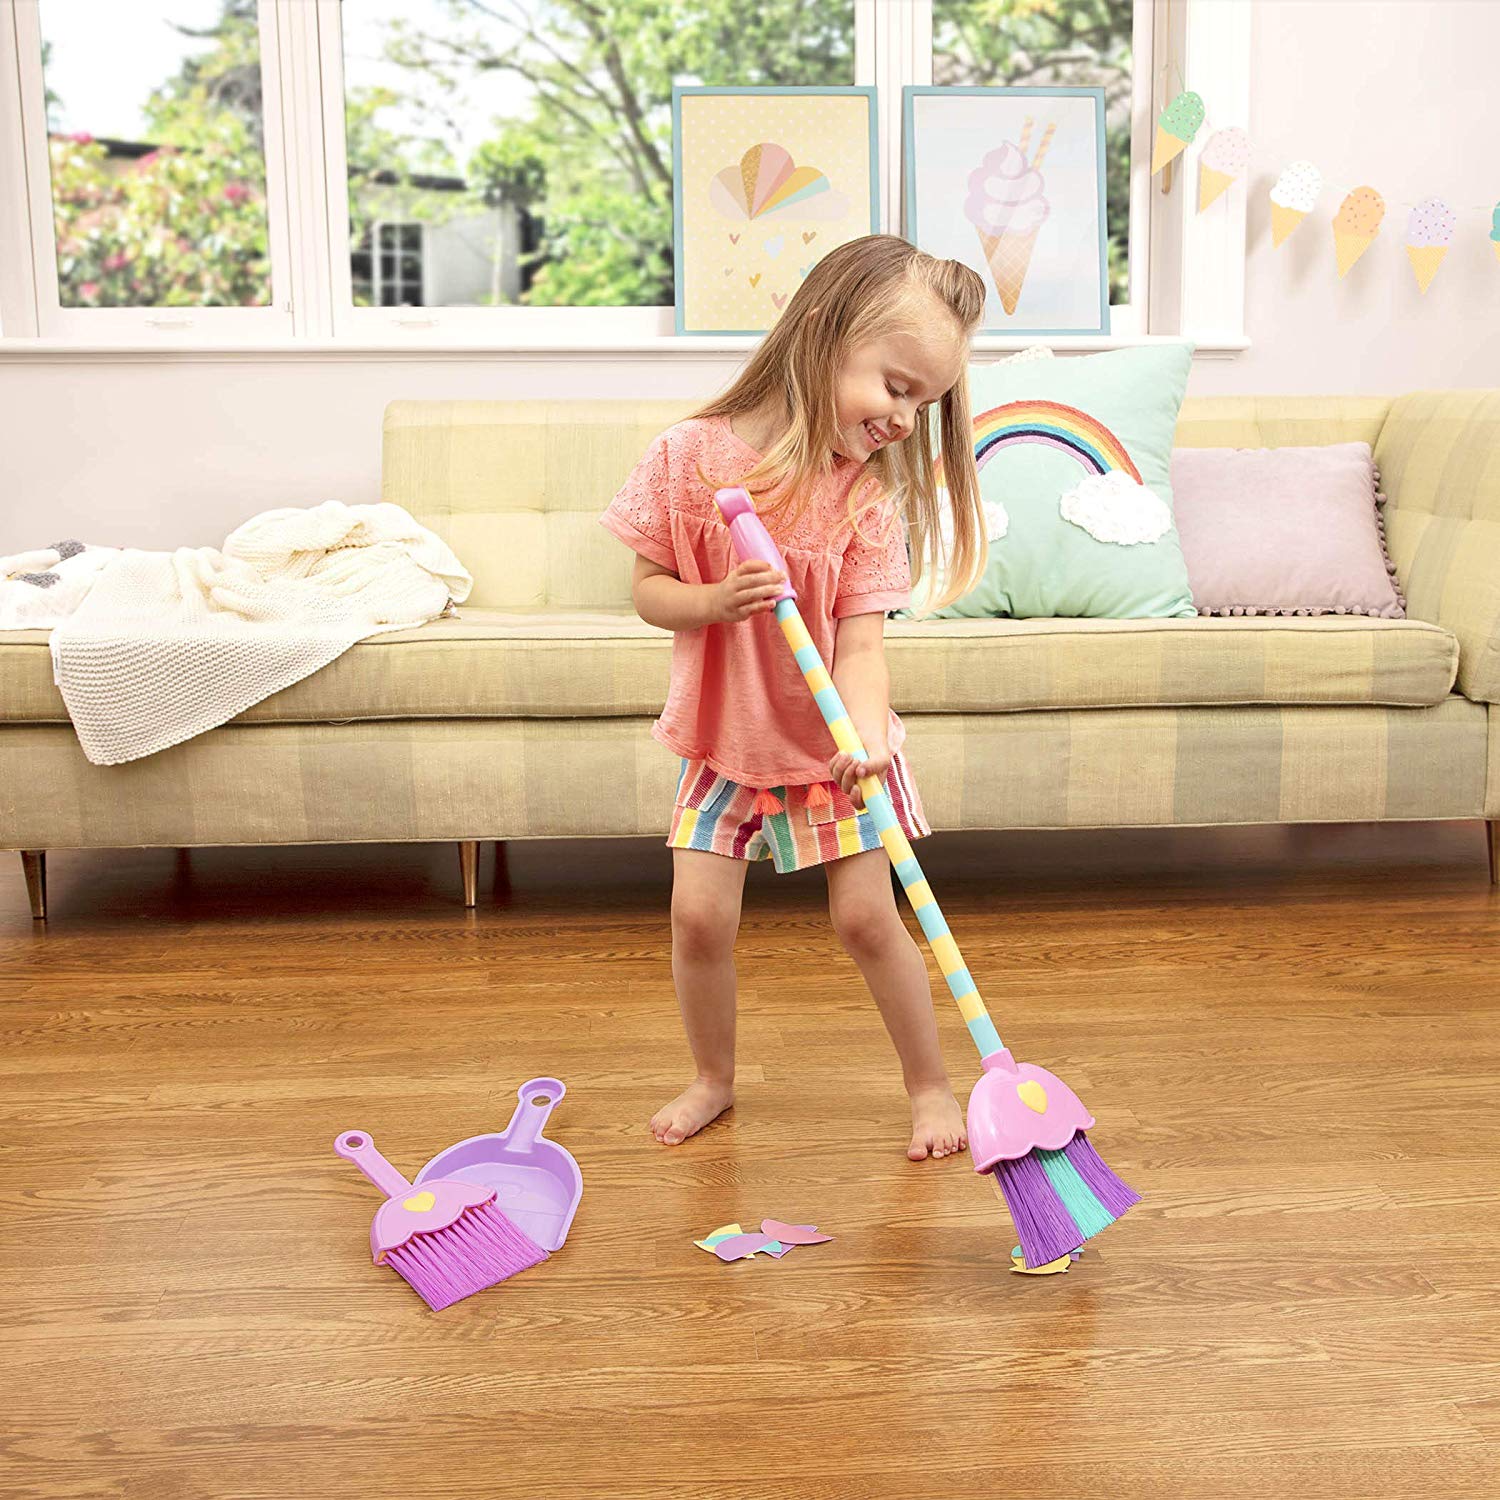 kids broom and dustpan